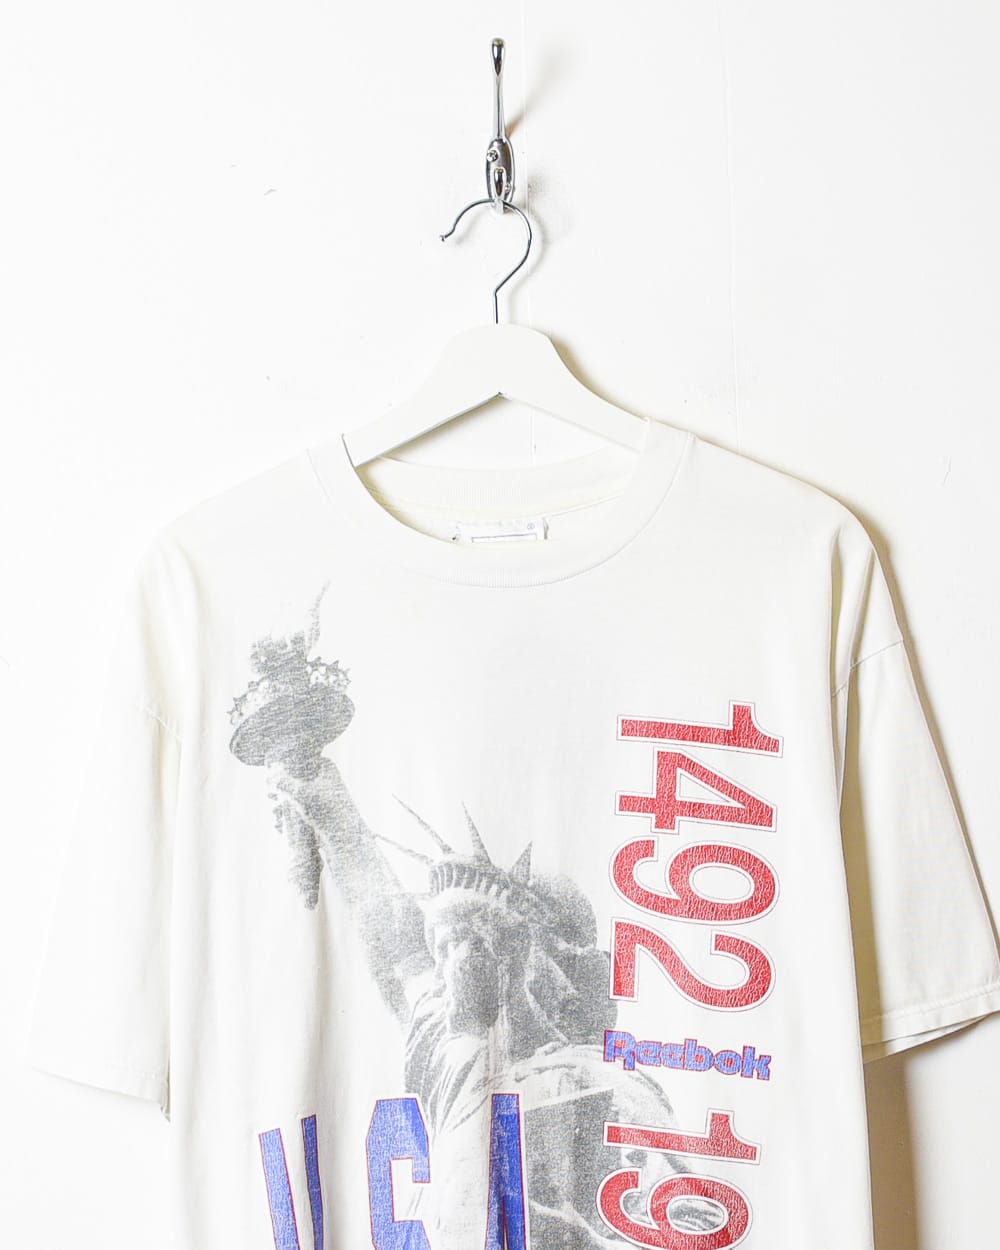 White Reebok USA 1992 T-Shirt - X-Large